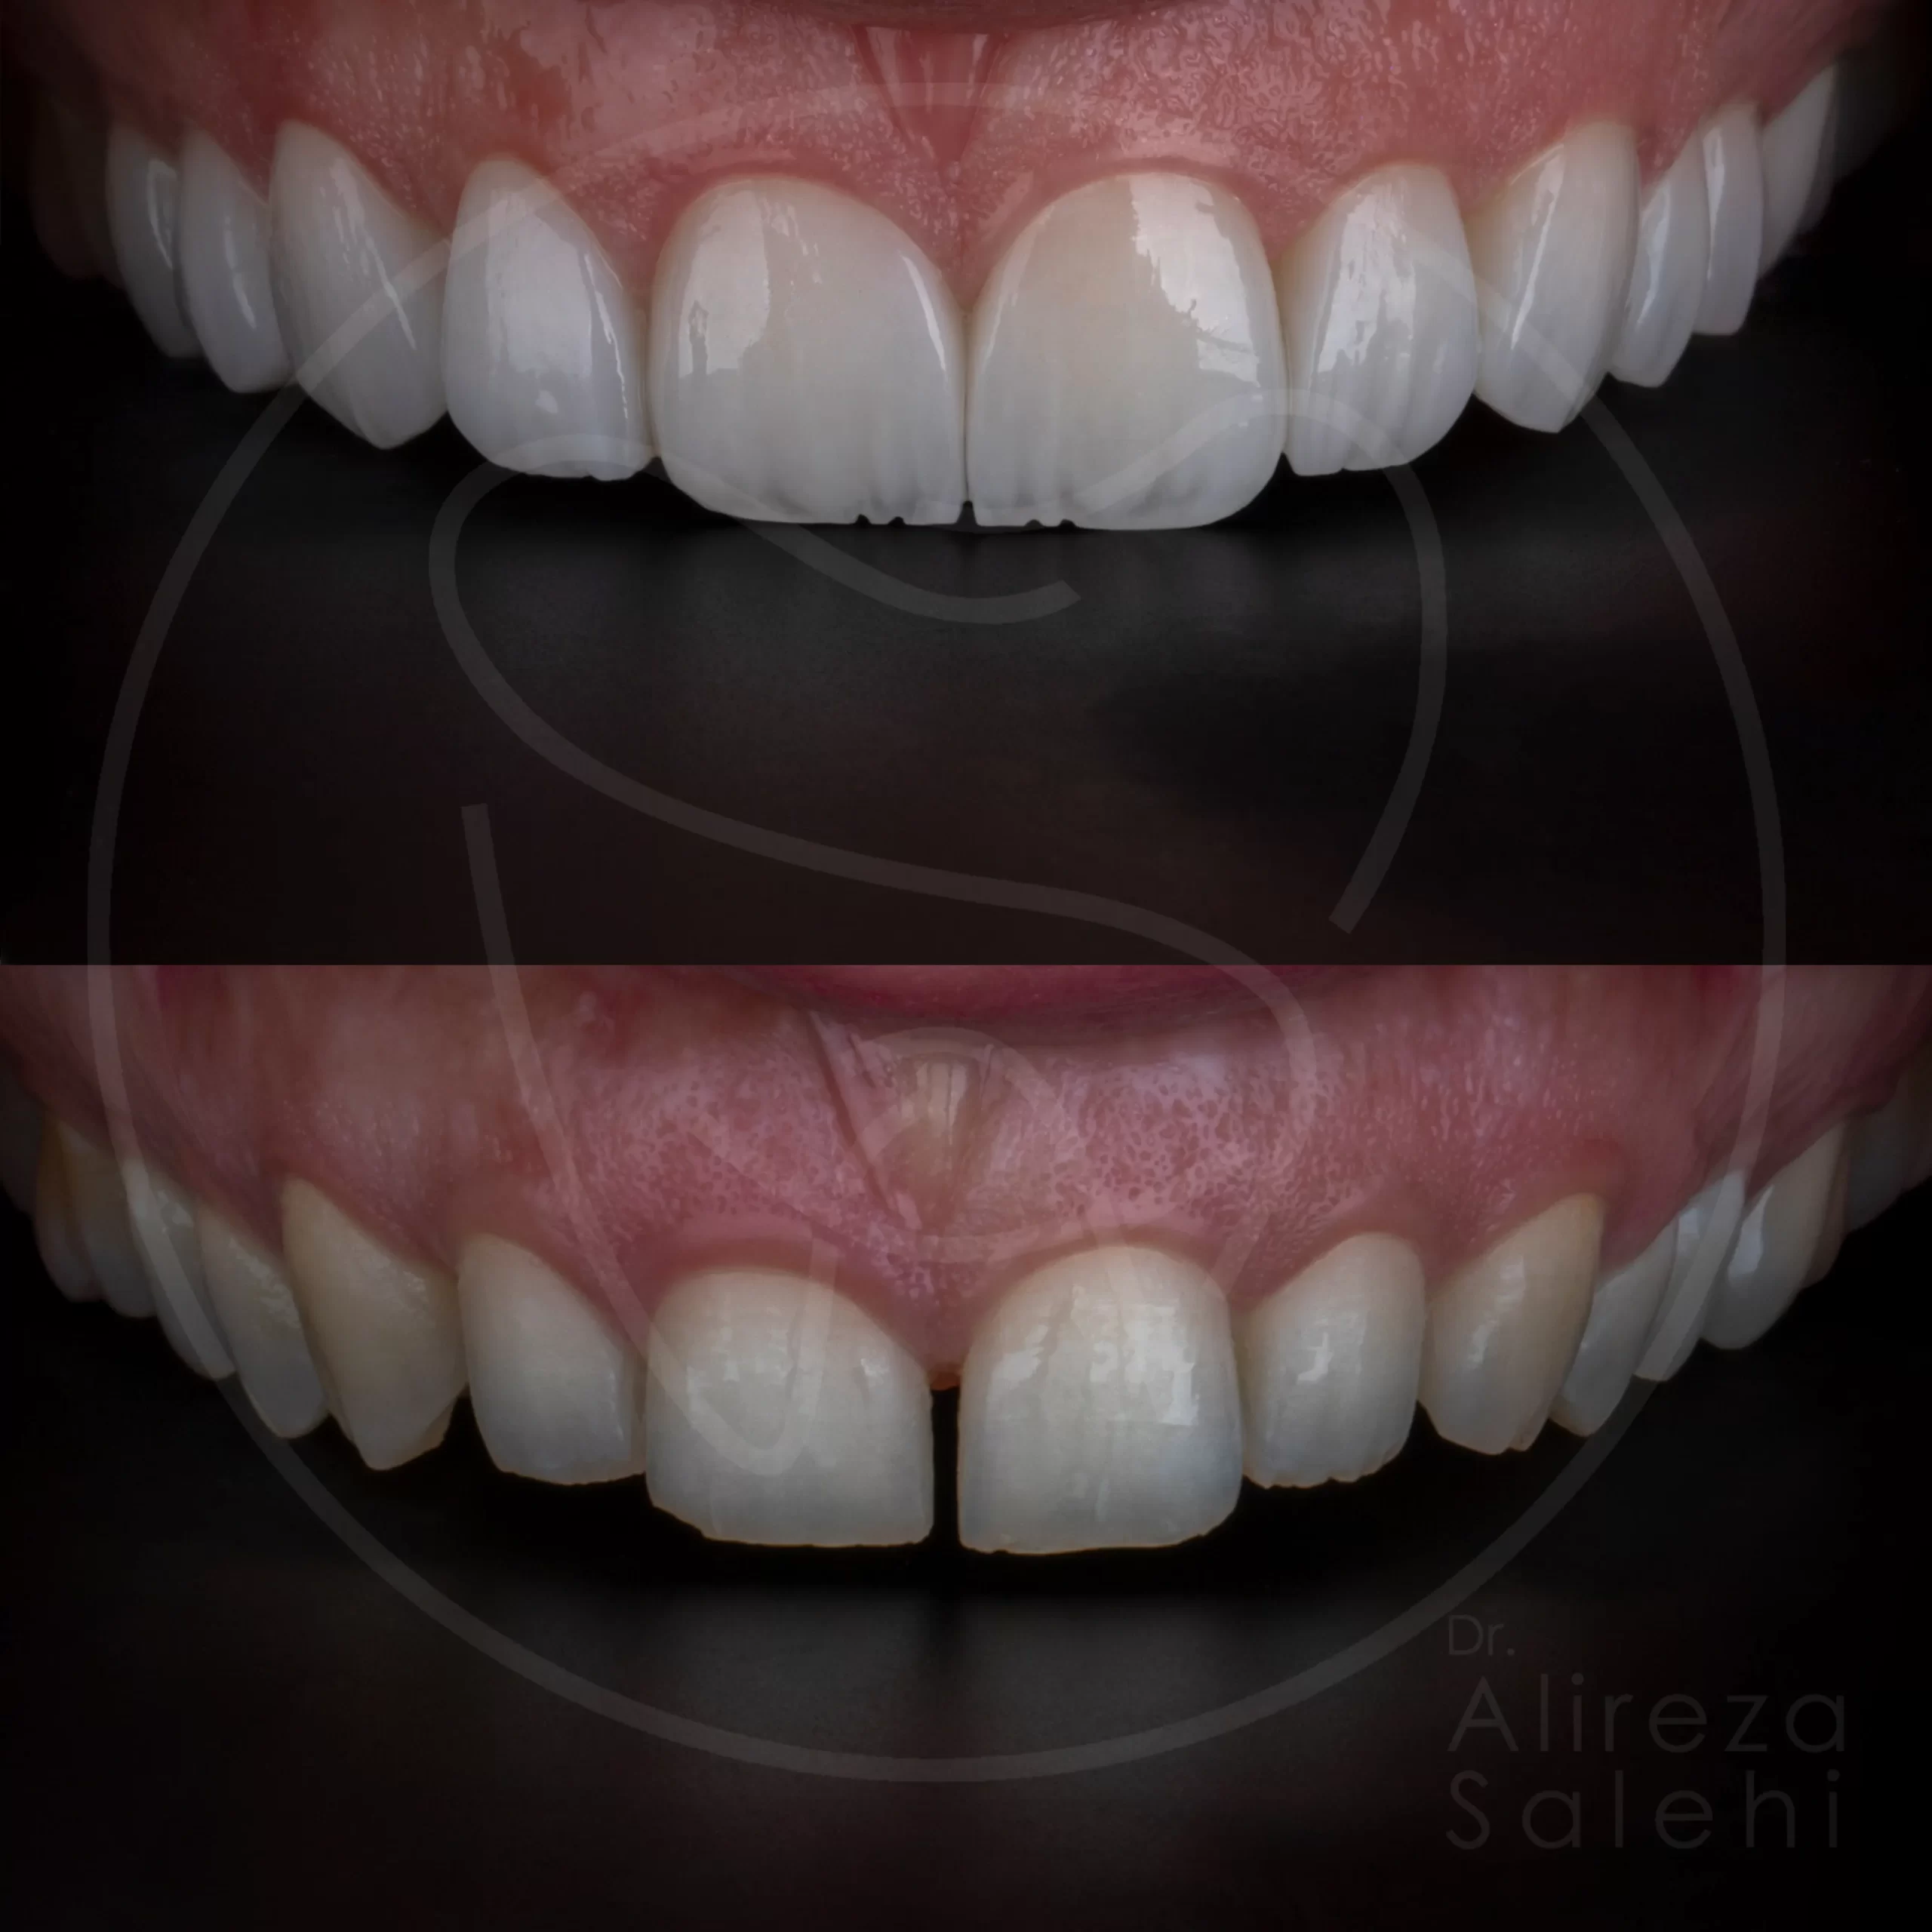 لمینت دندان در کلینیک دندانپزشکی دکتر علیرضا صالحی 28